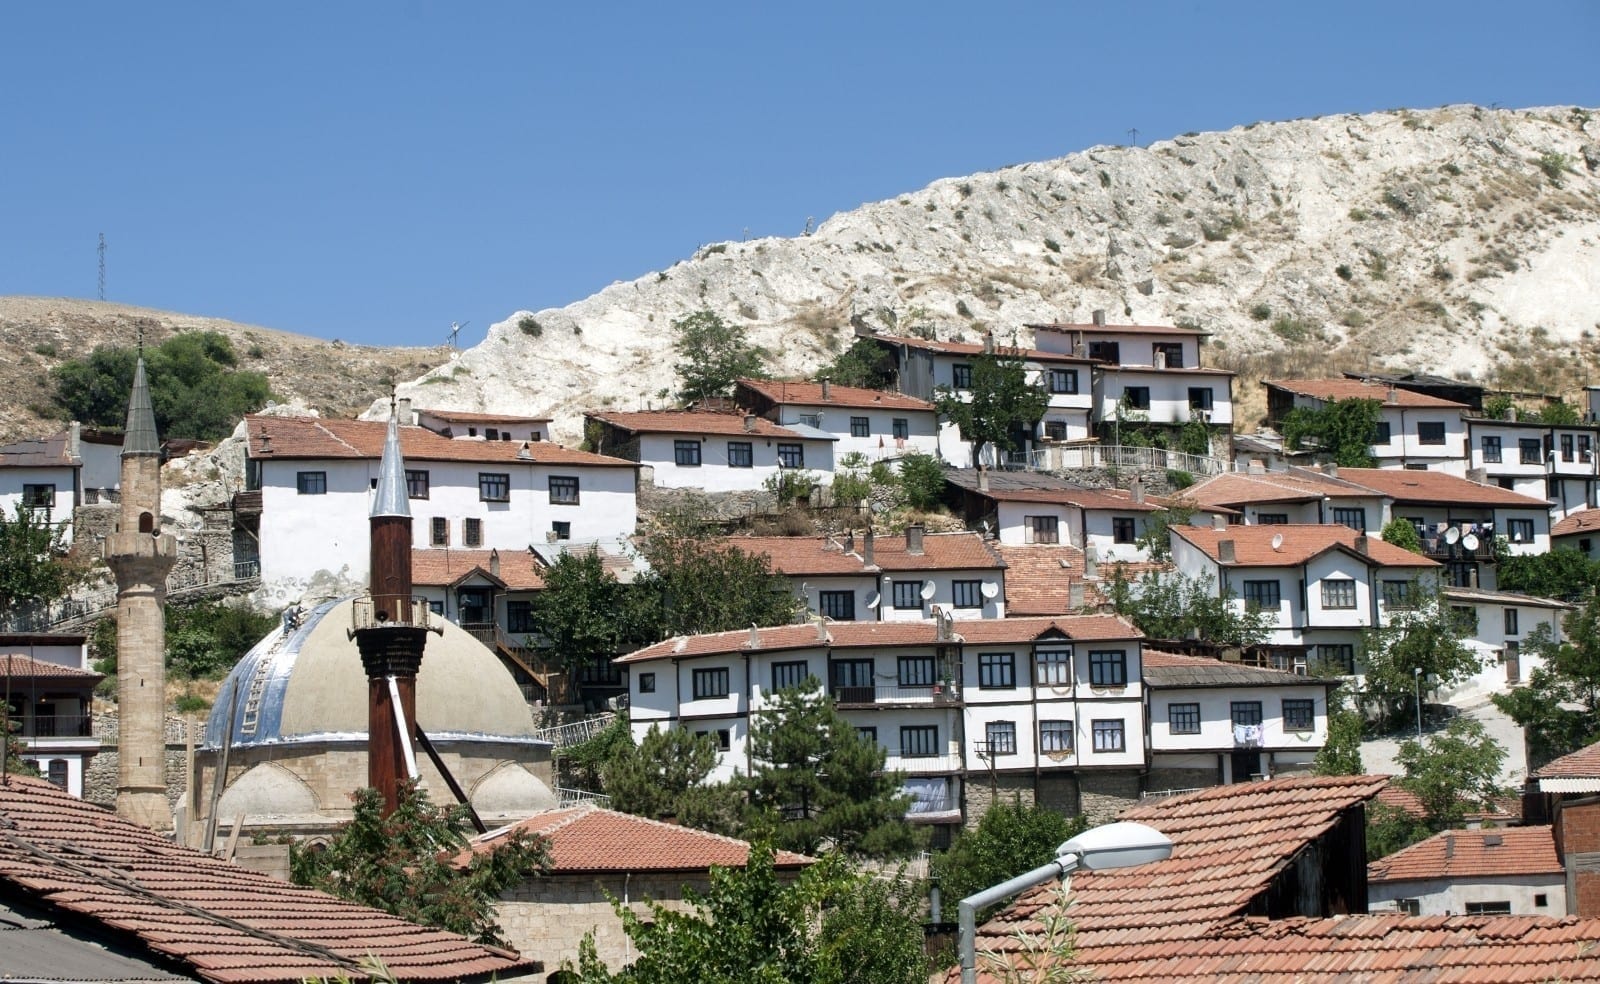 TESOL Turkey - Visit Beypazari Homes when teaching English in Ankara